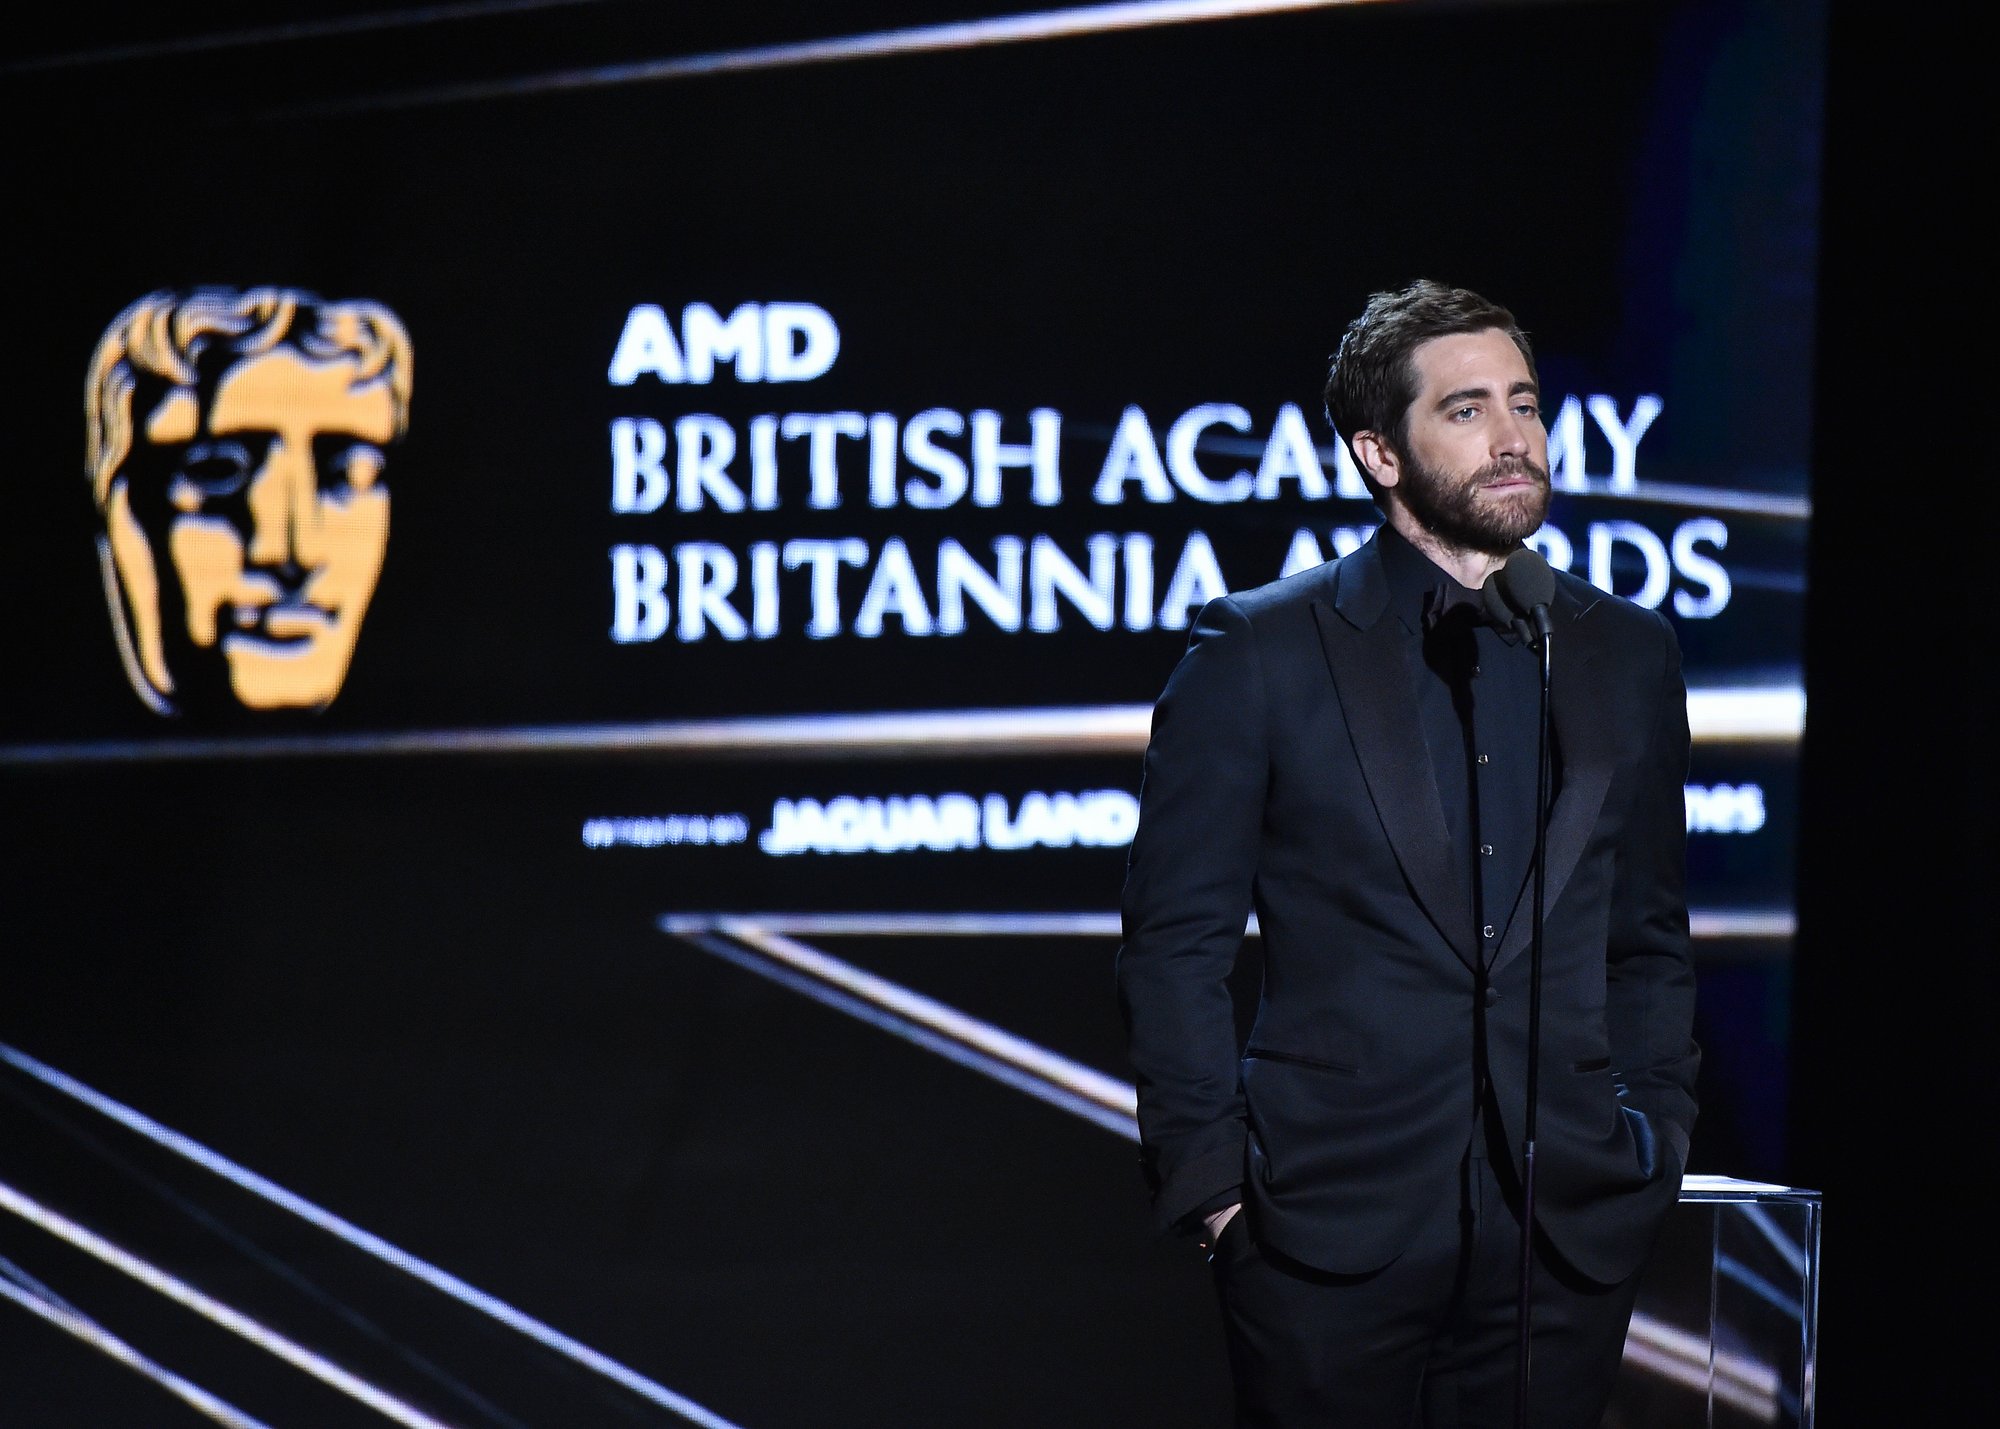 2016-10-28-AMD-British-Academy-Britannia-Awards-156.jpg